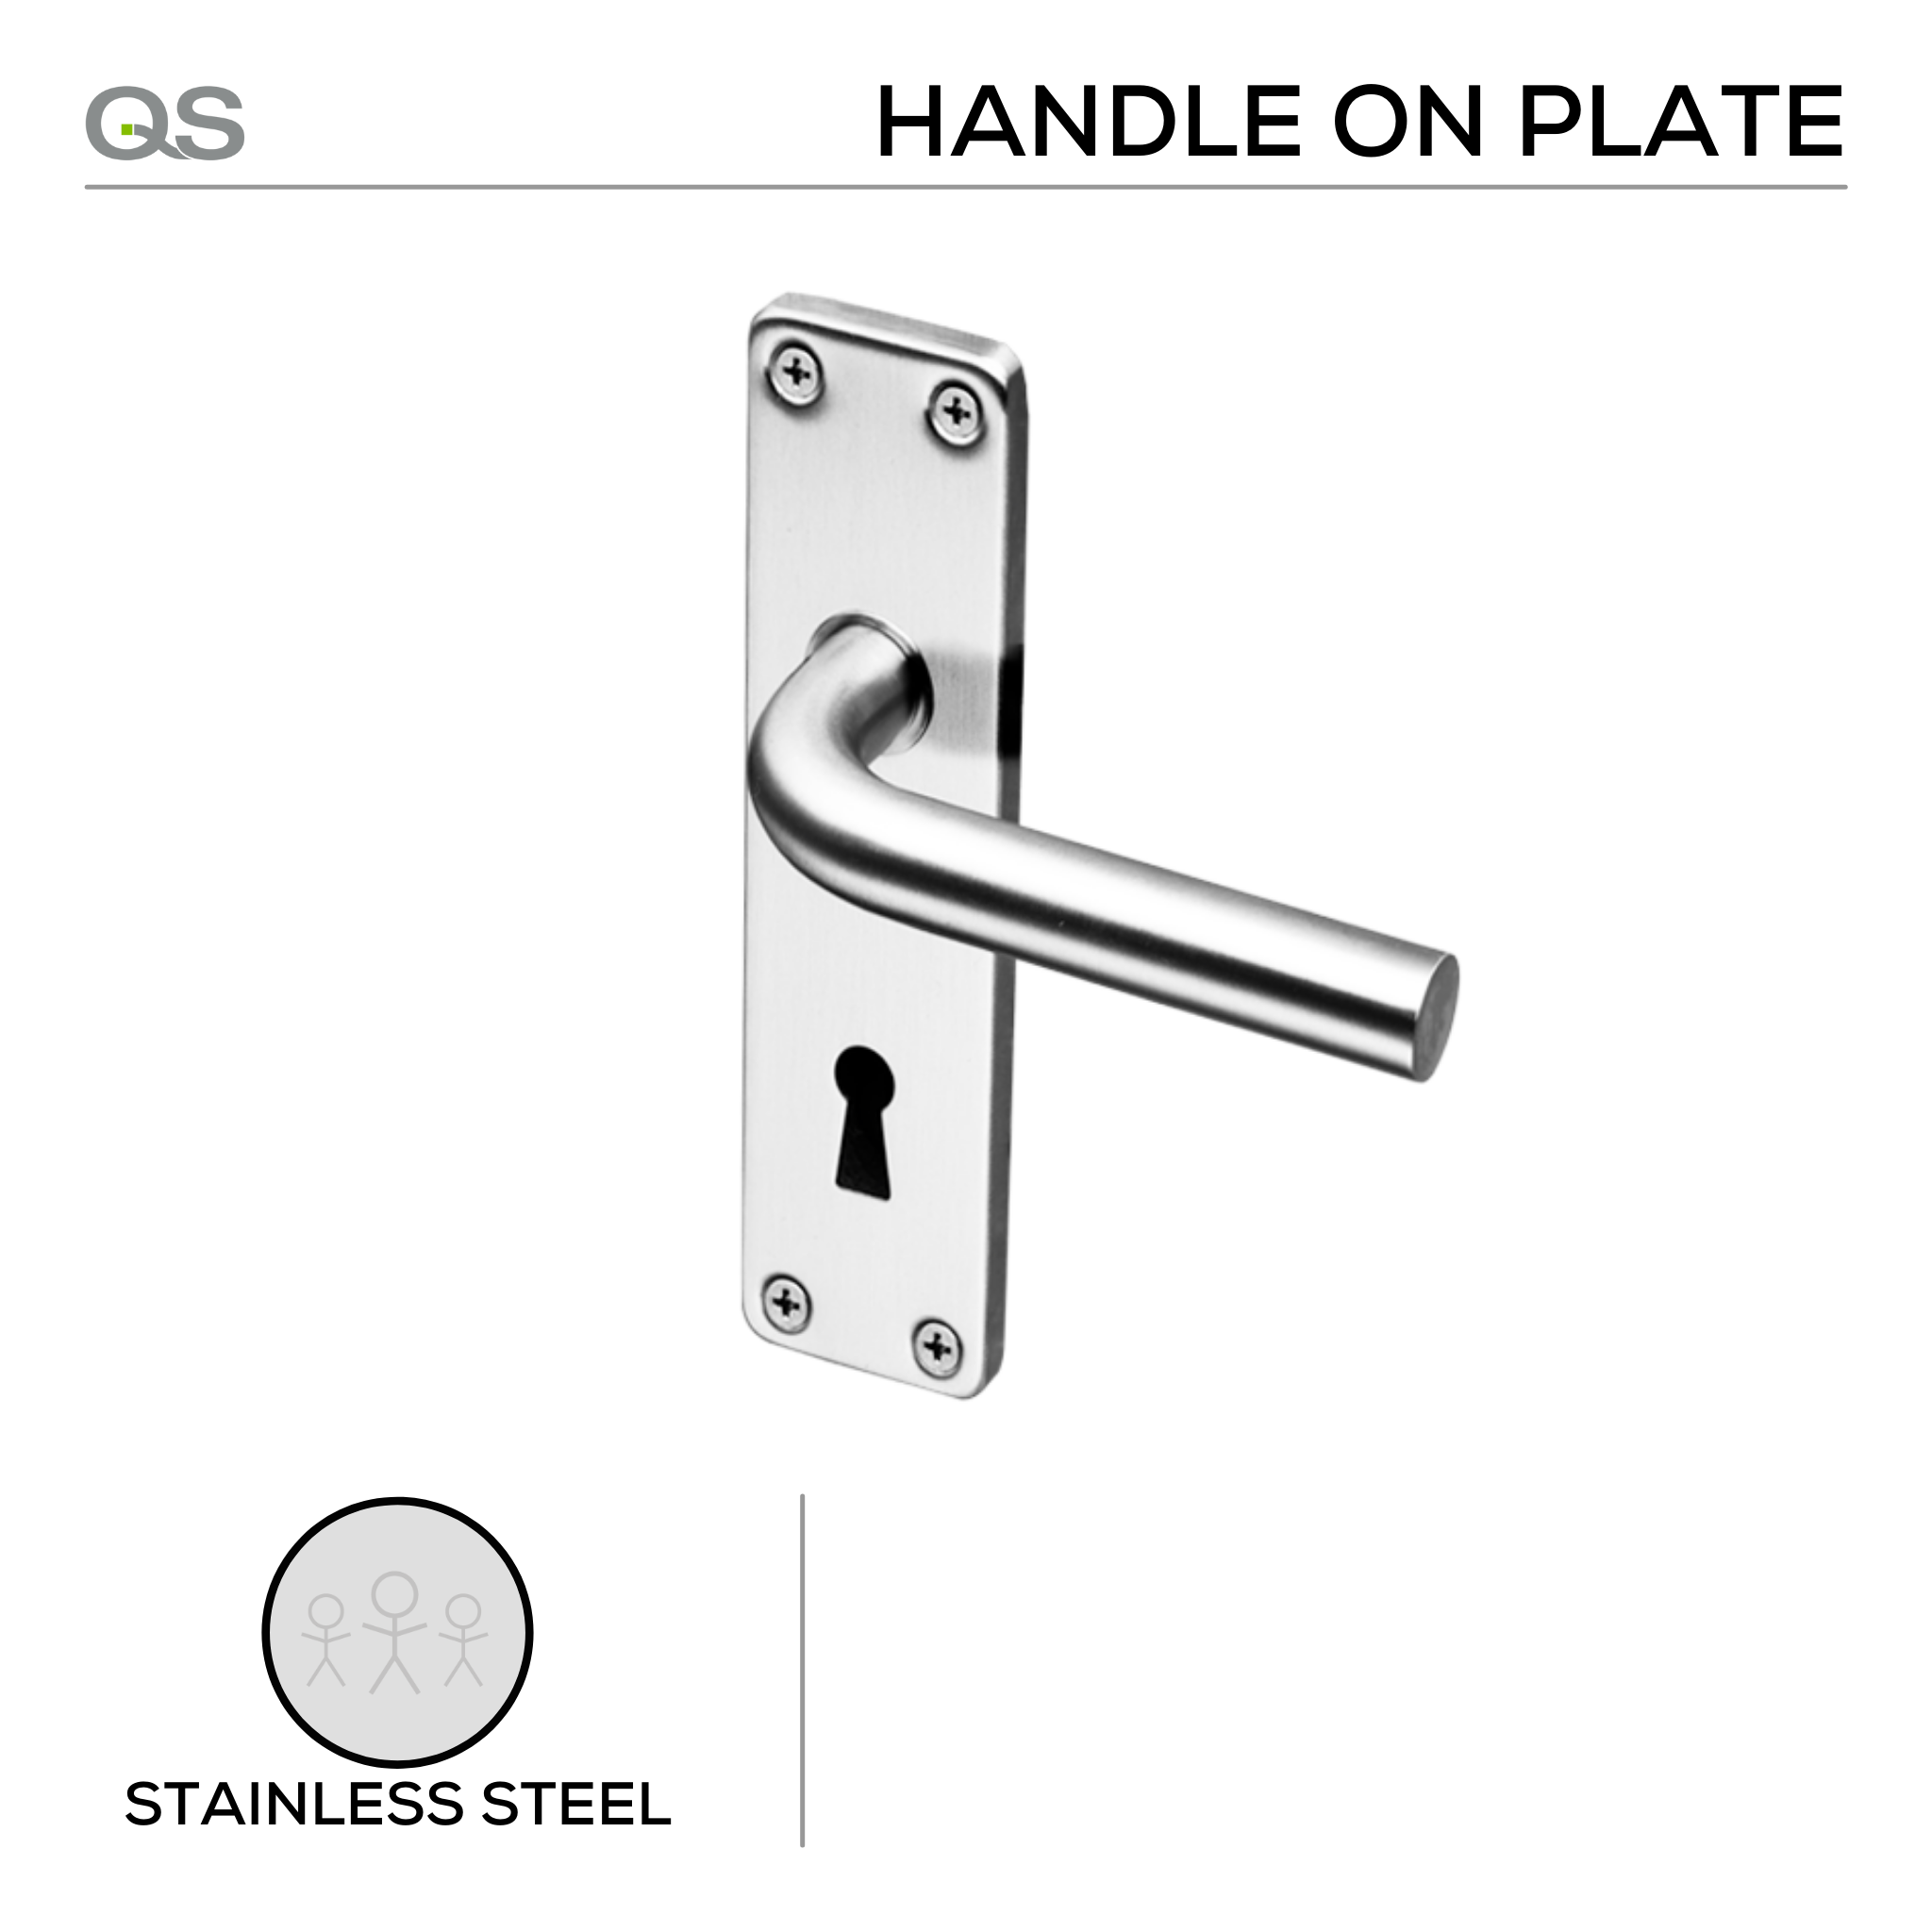 Coupé Oslo, Lever Handles, Tubular, On Plate, Stainless Steel, QS